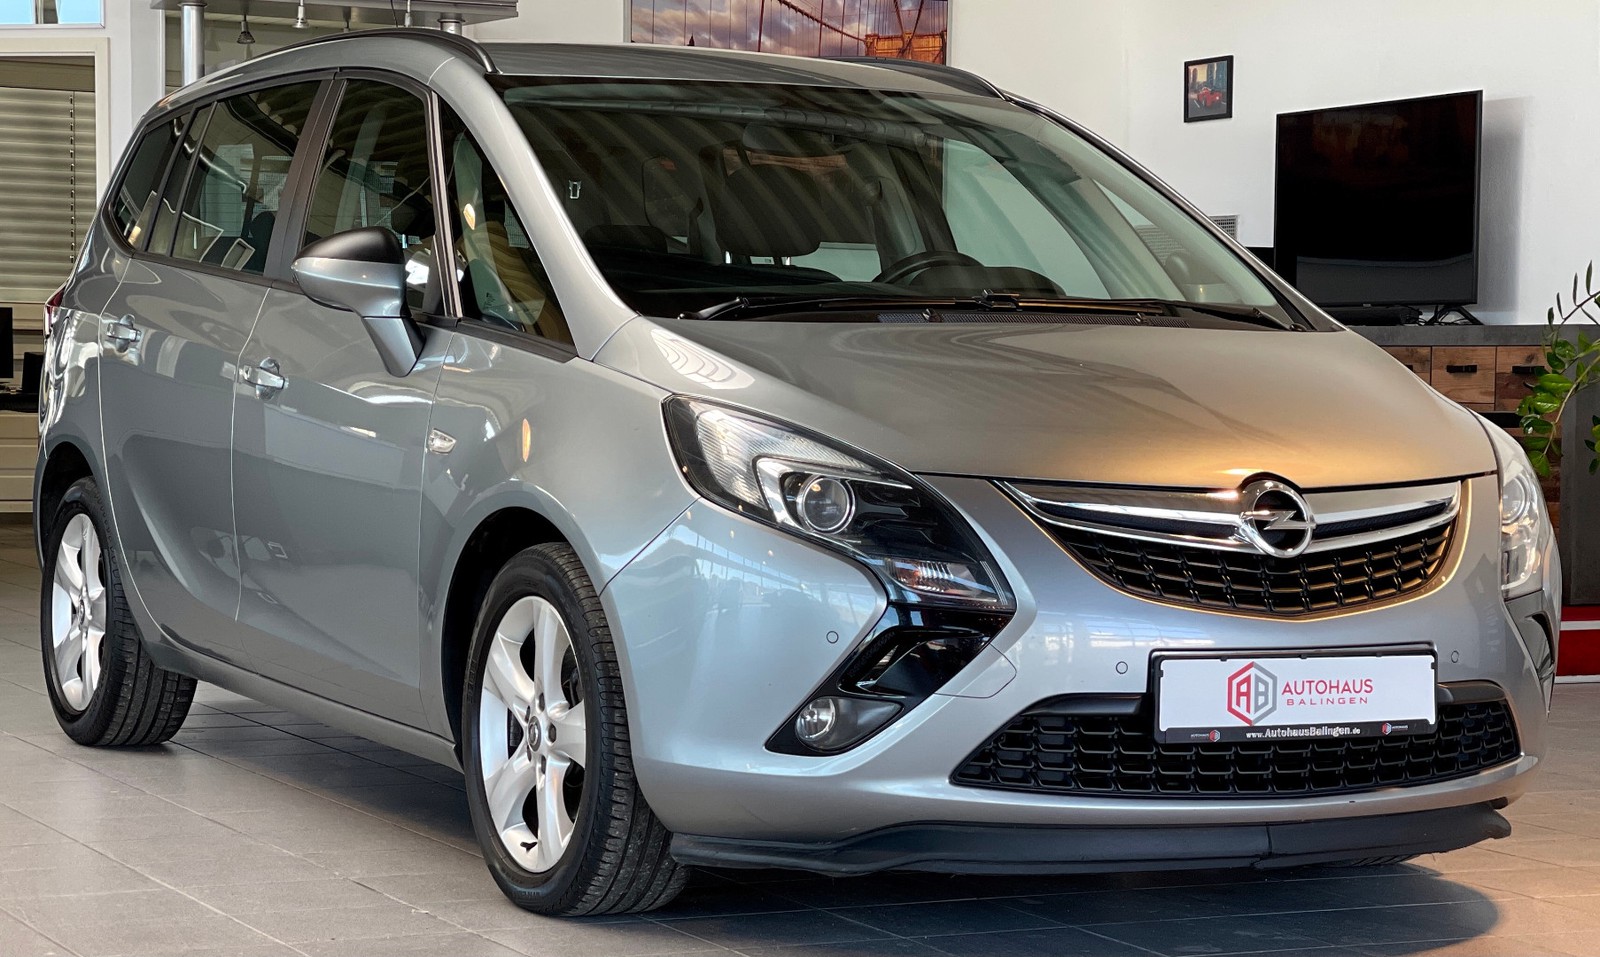 Opel Zafira C Tourer Edition gebraucht kaufen in Balingen Preis 5700 eur -  Int.Nr.: 1785 VERKAUFT